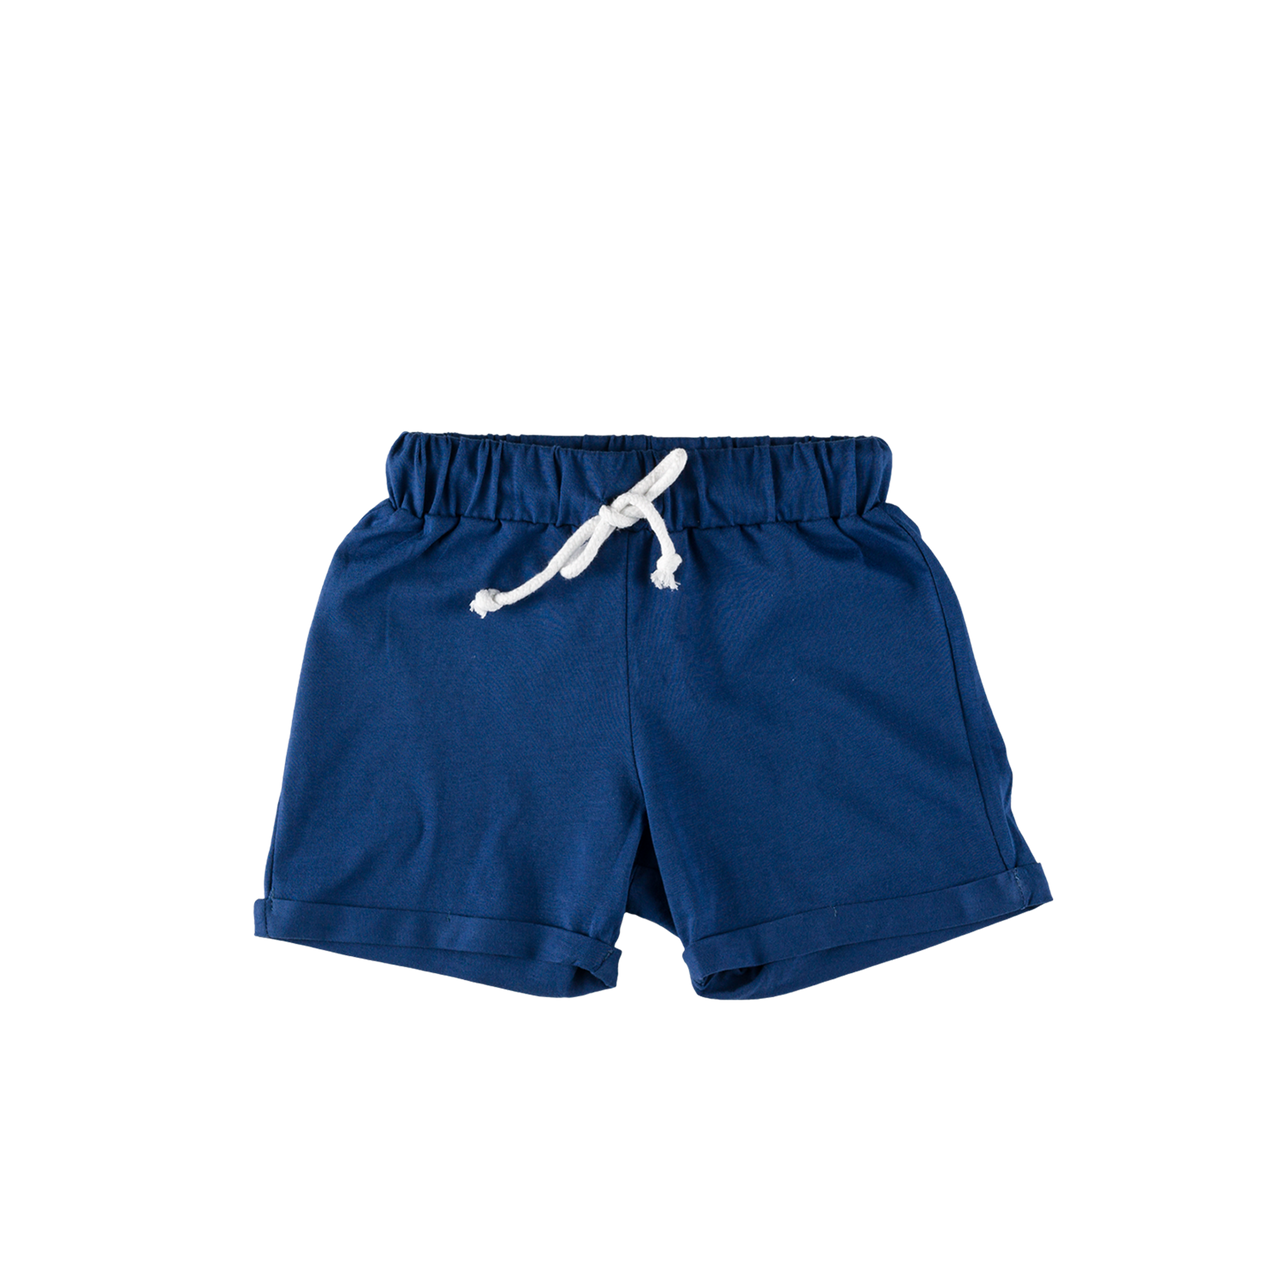 "Easy" Shorts - Navy Blue